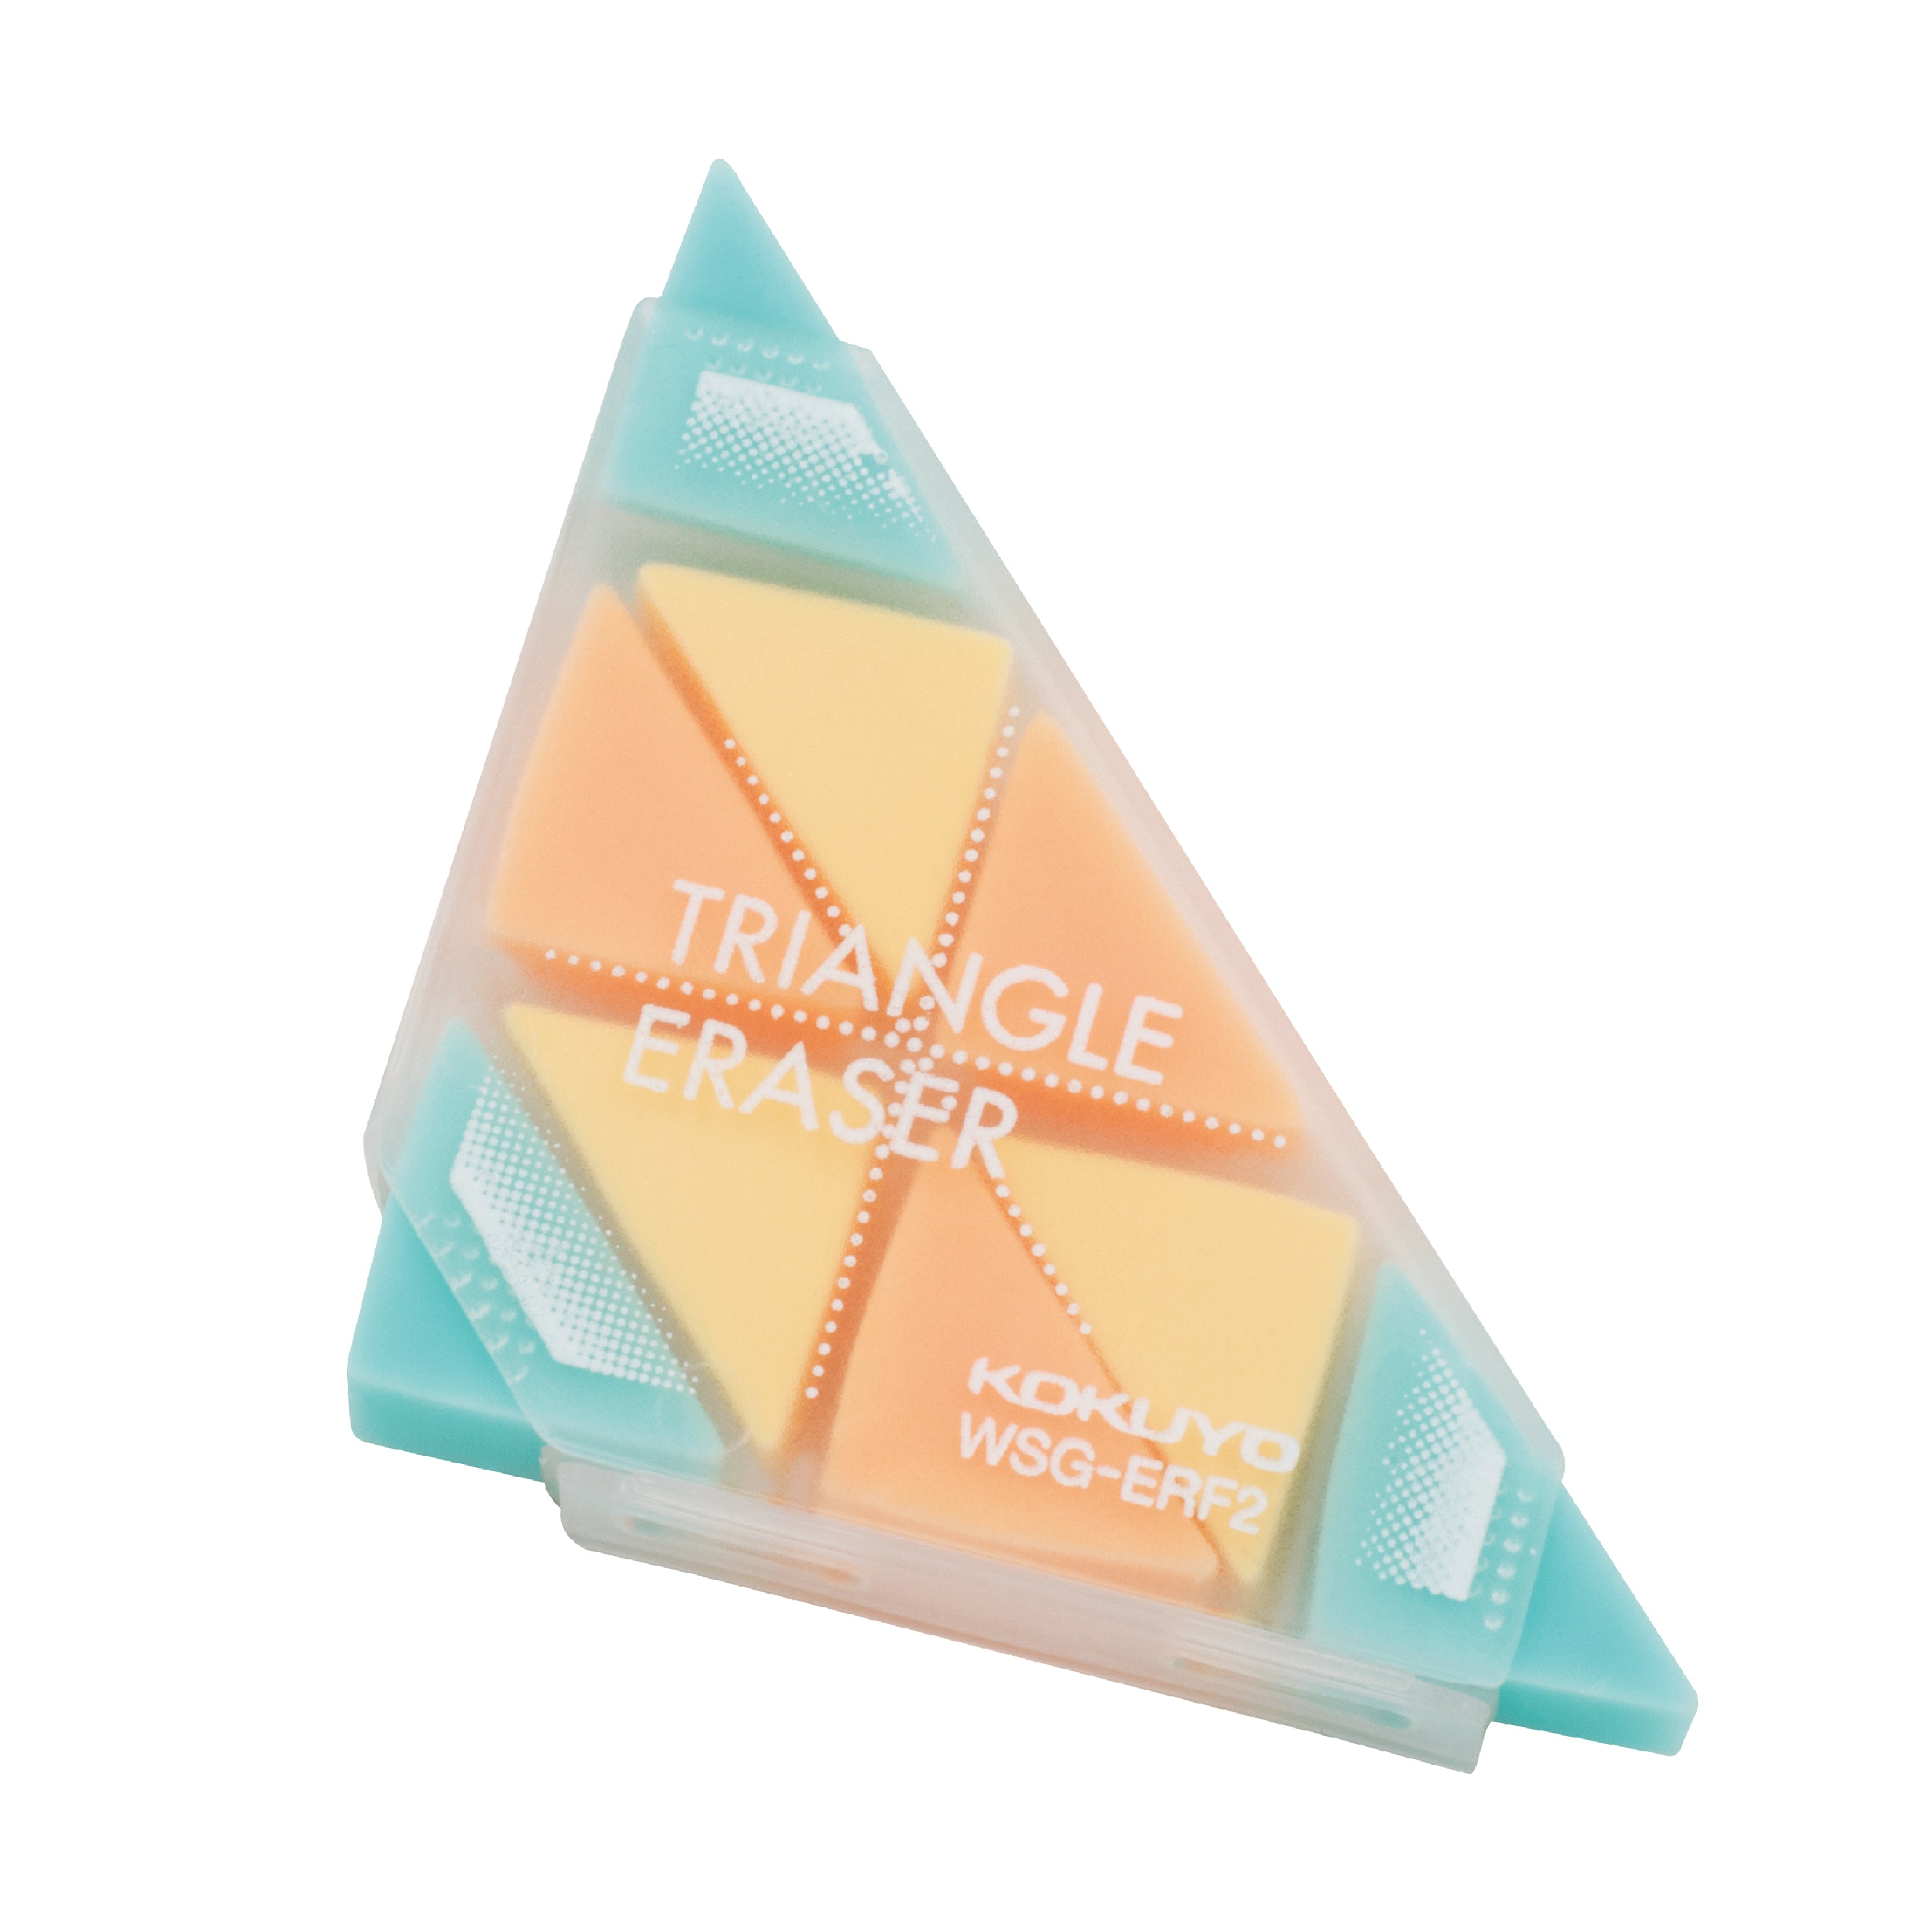 Kokuyo Triangle Multi-angle Eraser 角角樂三角形多角度橡皮擦